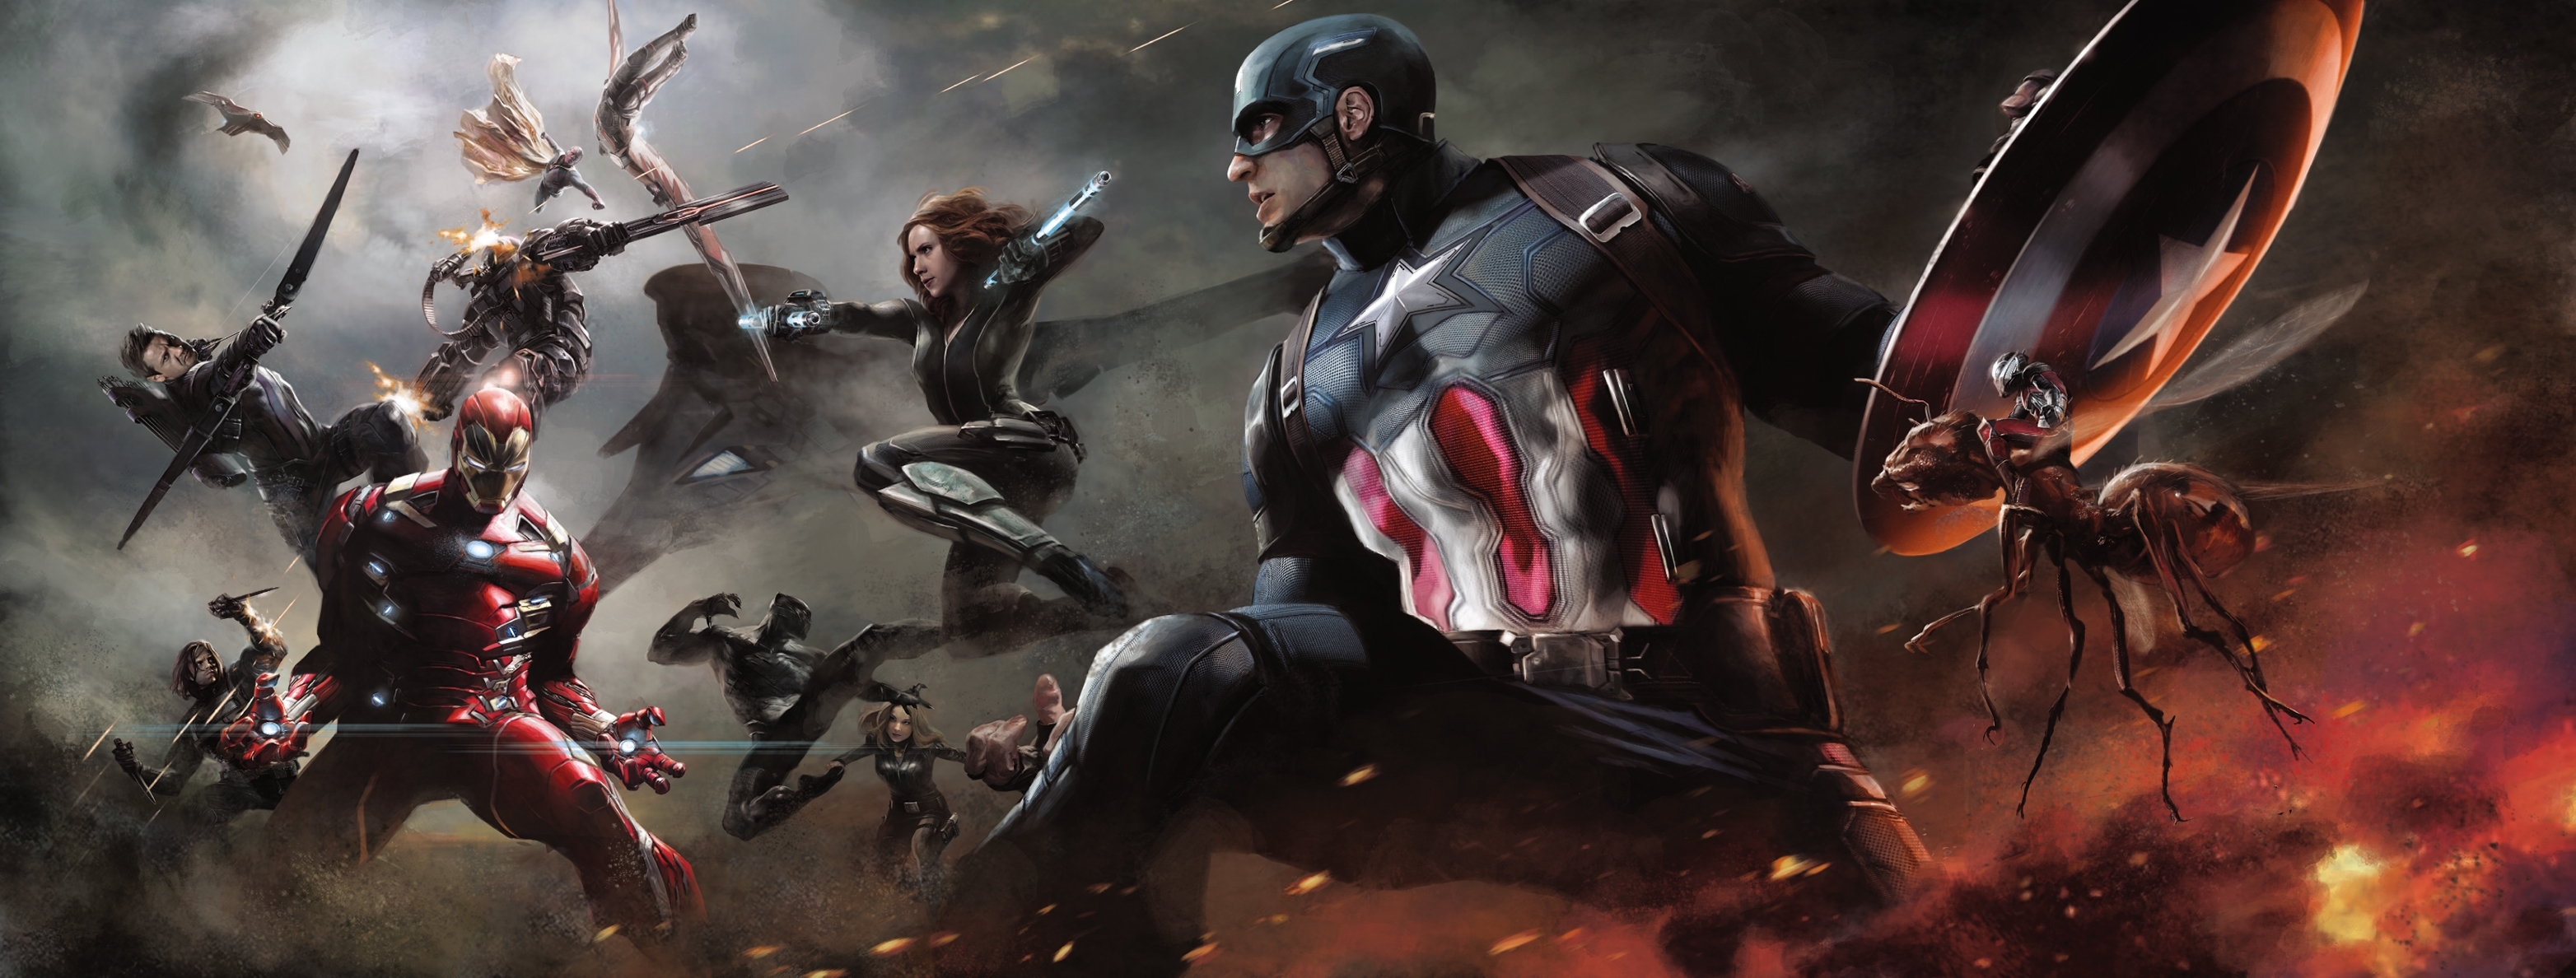 Wallpaper Paul Rudd Scott Lang Ant Man Captain America Civil War